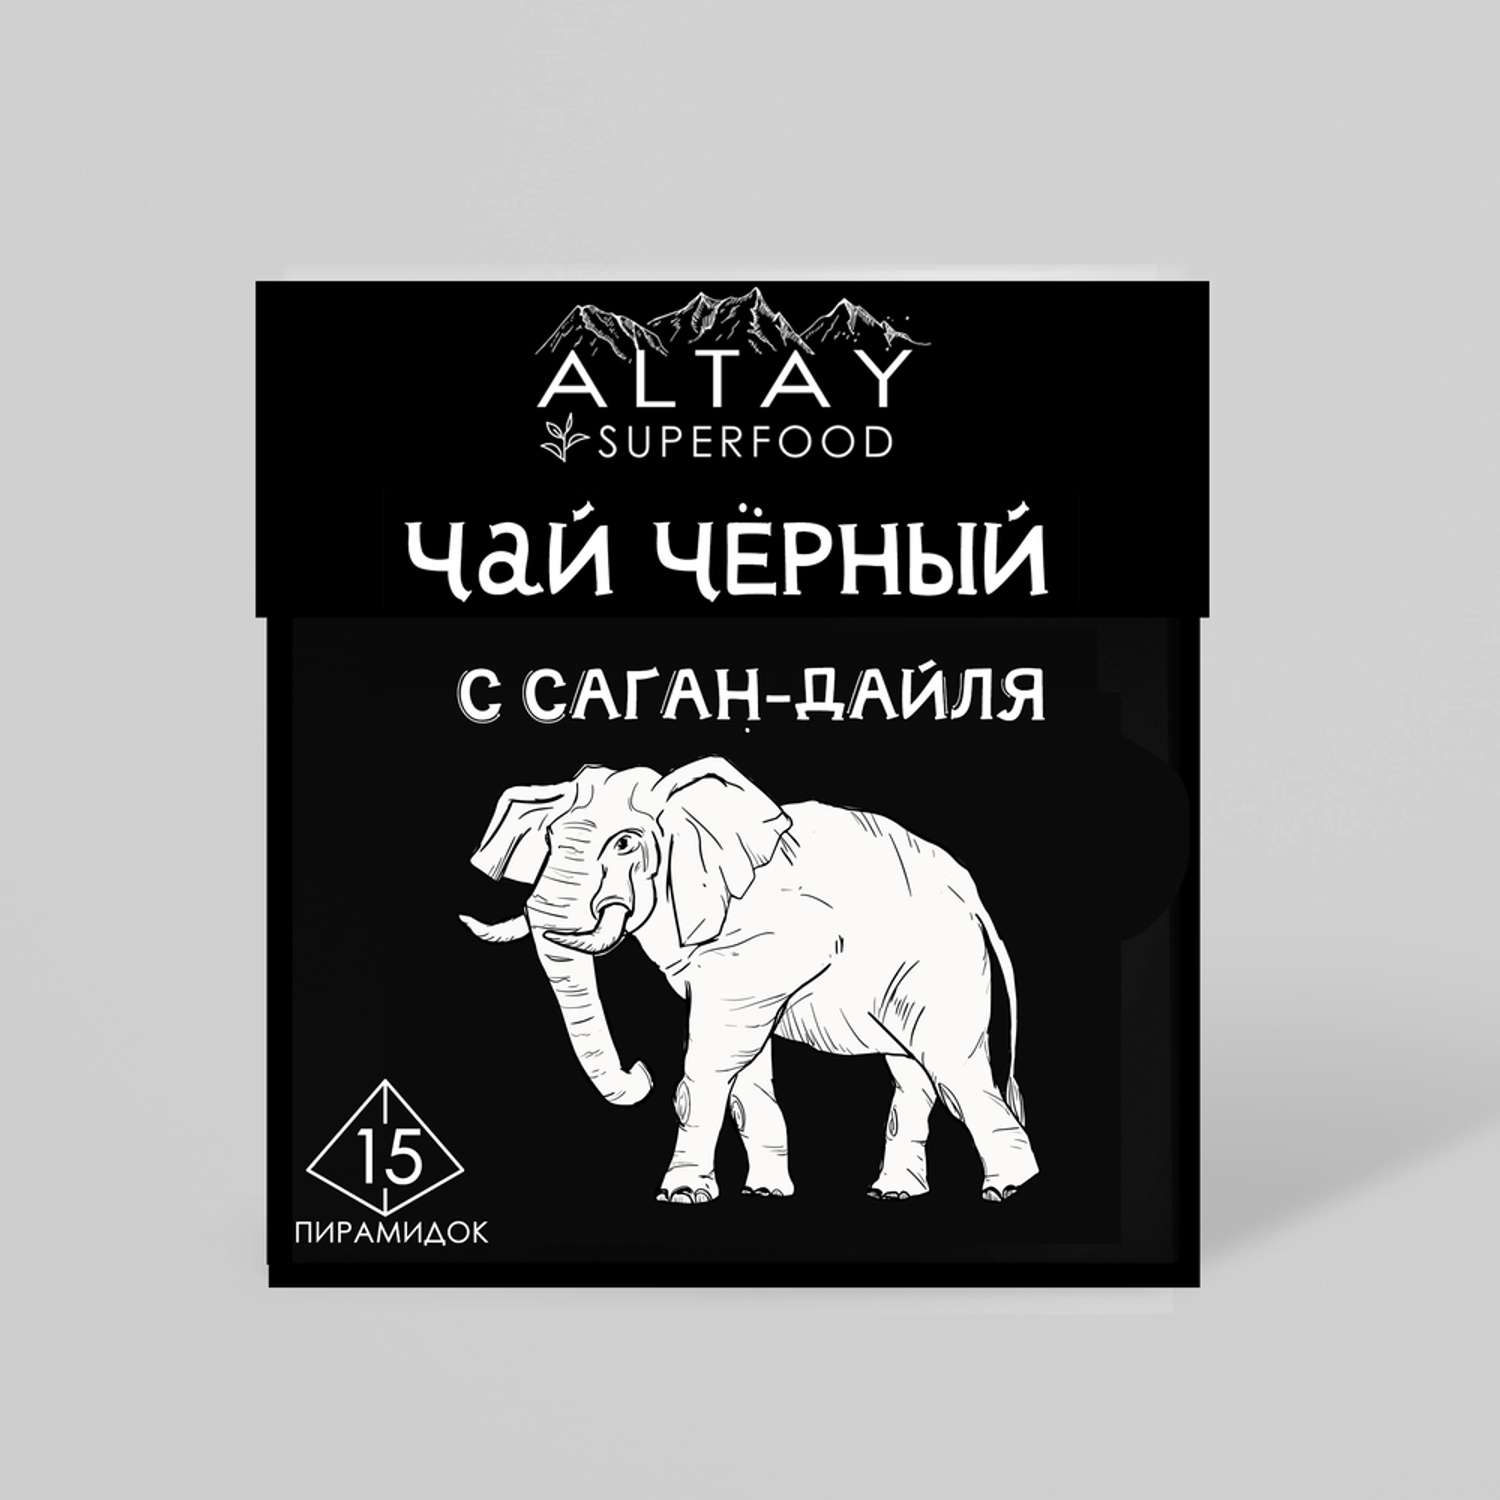 Чай чёрный с саган-дайля Altay Superfood 15 пирамидок по 2 гр - фото 1